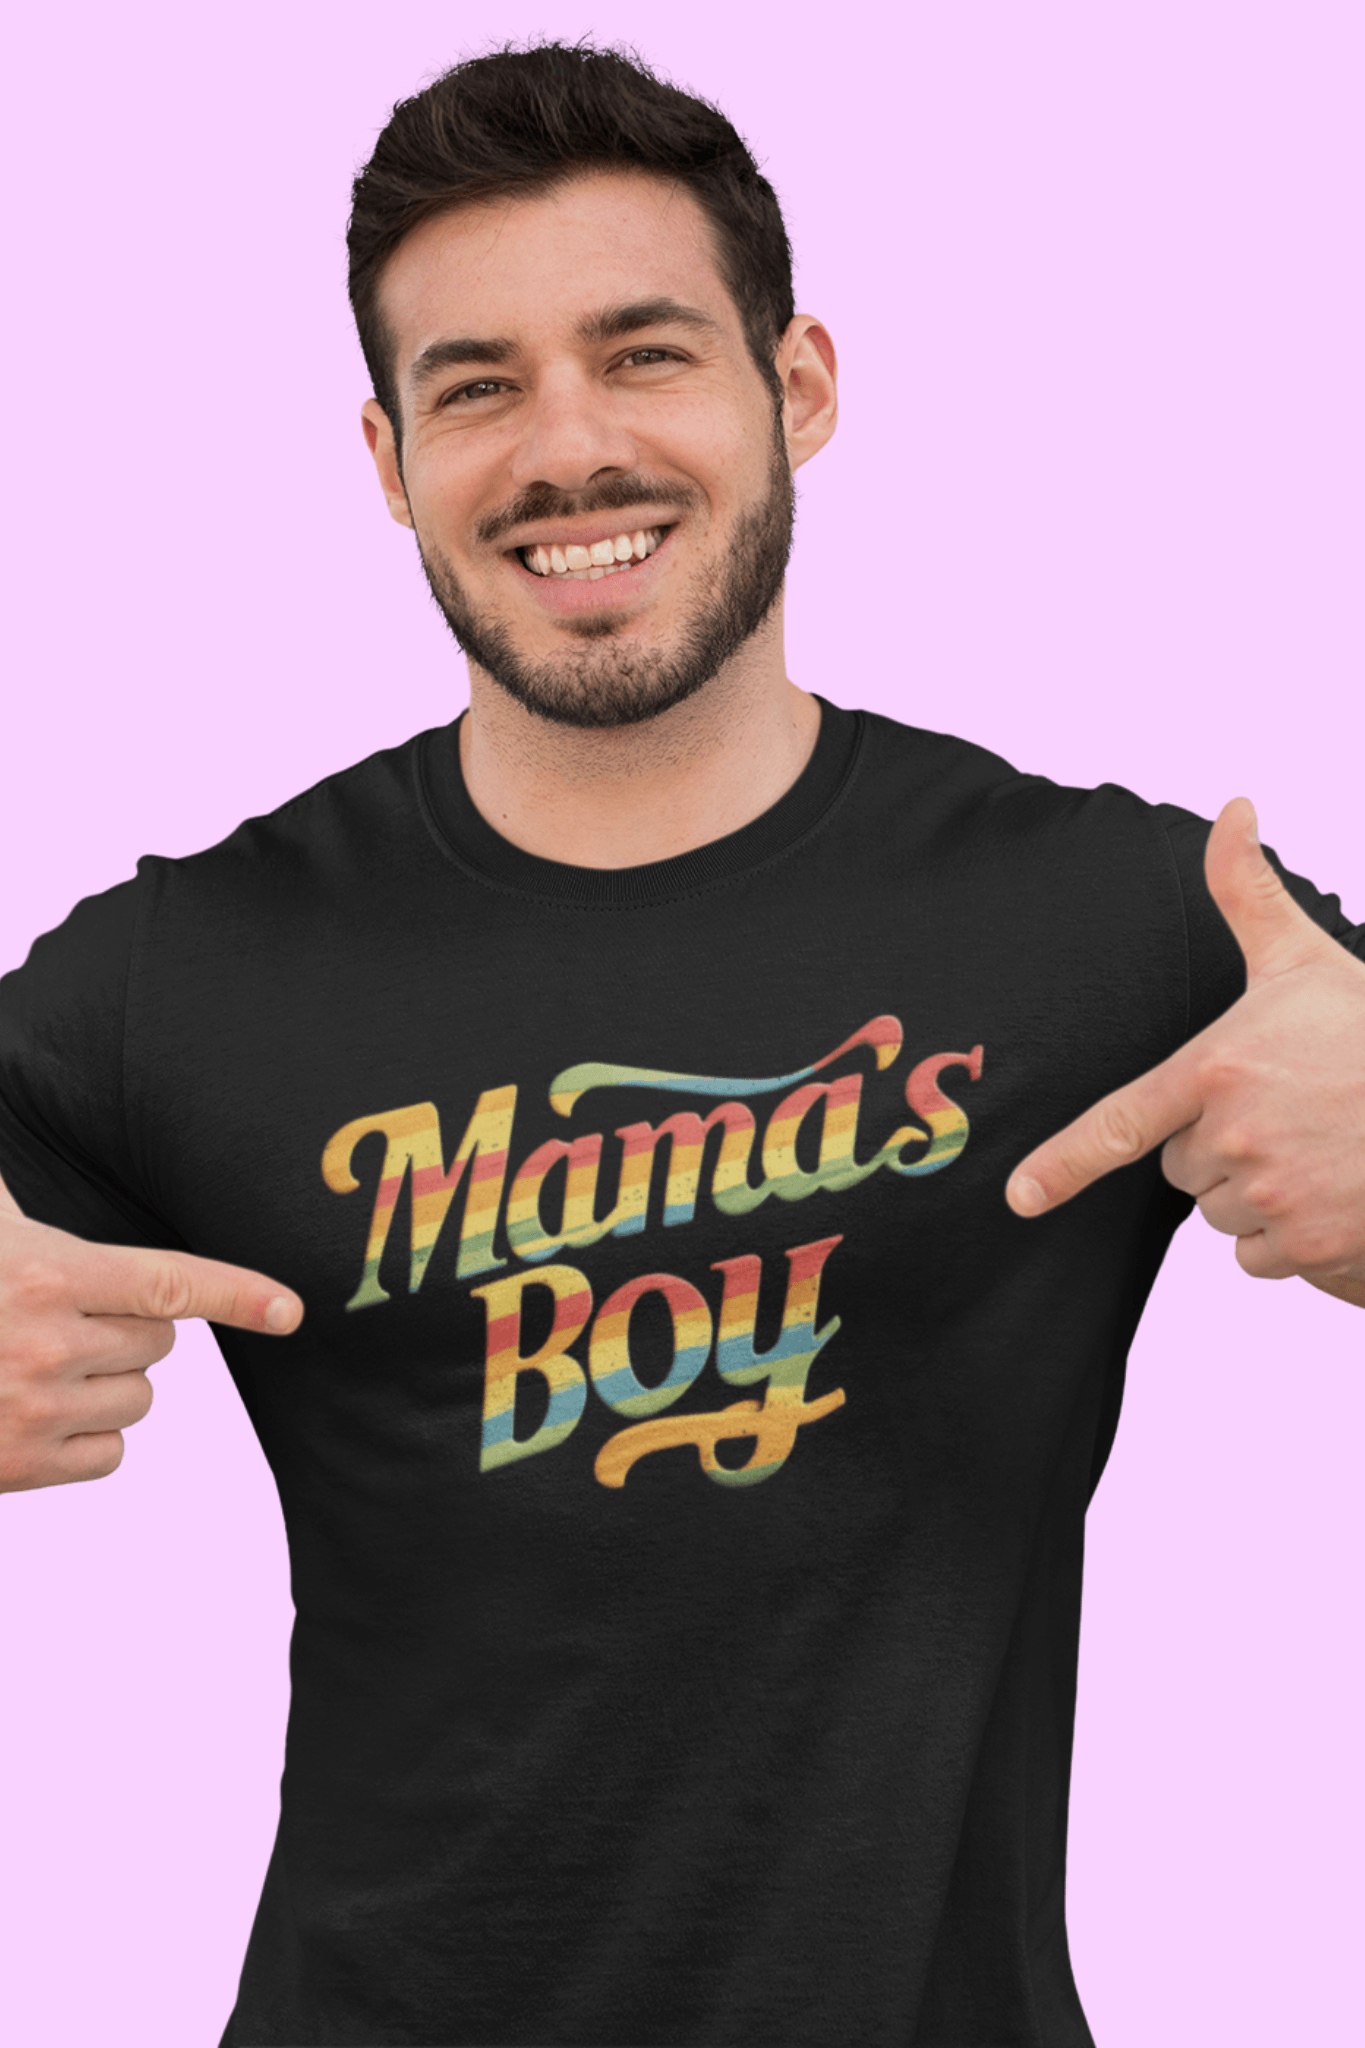 Mama's Boy T-Shirt - Black